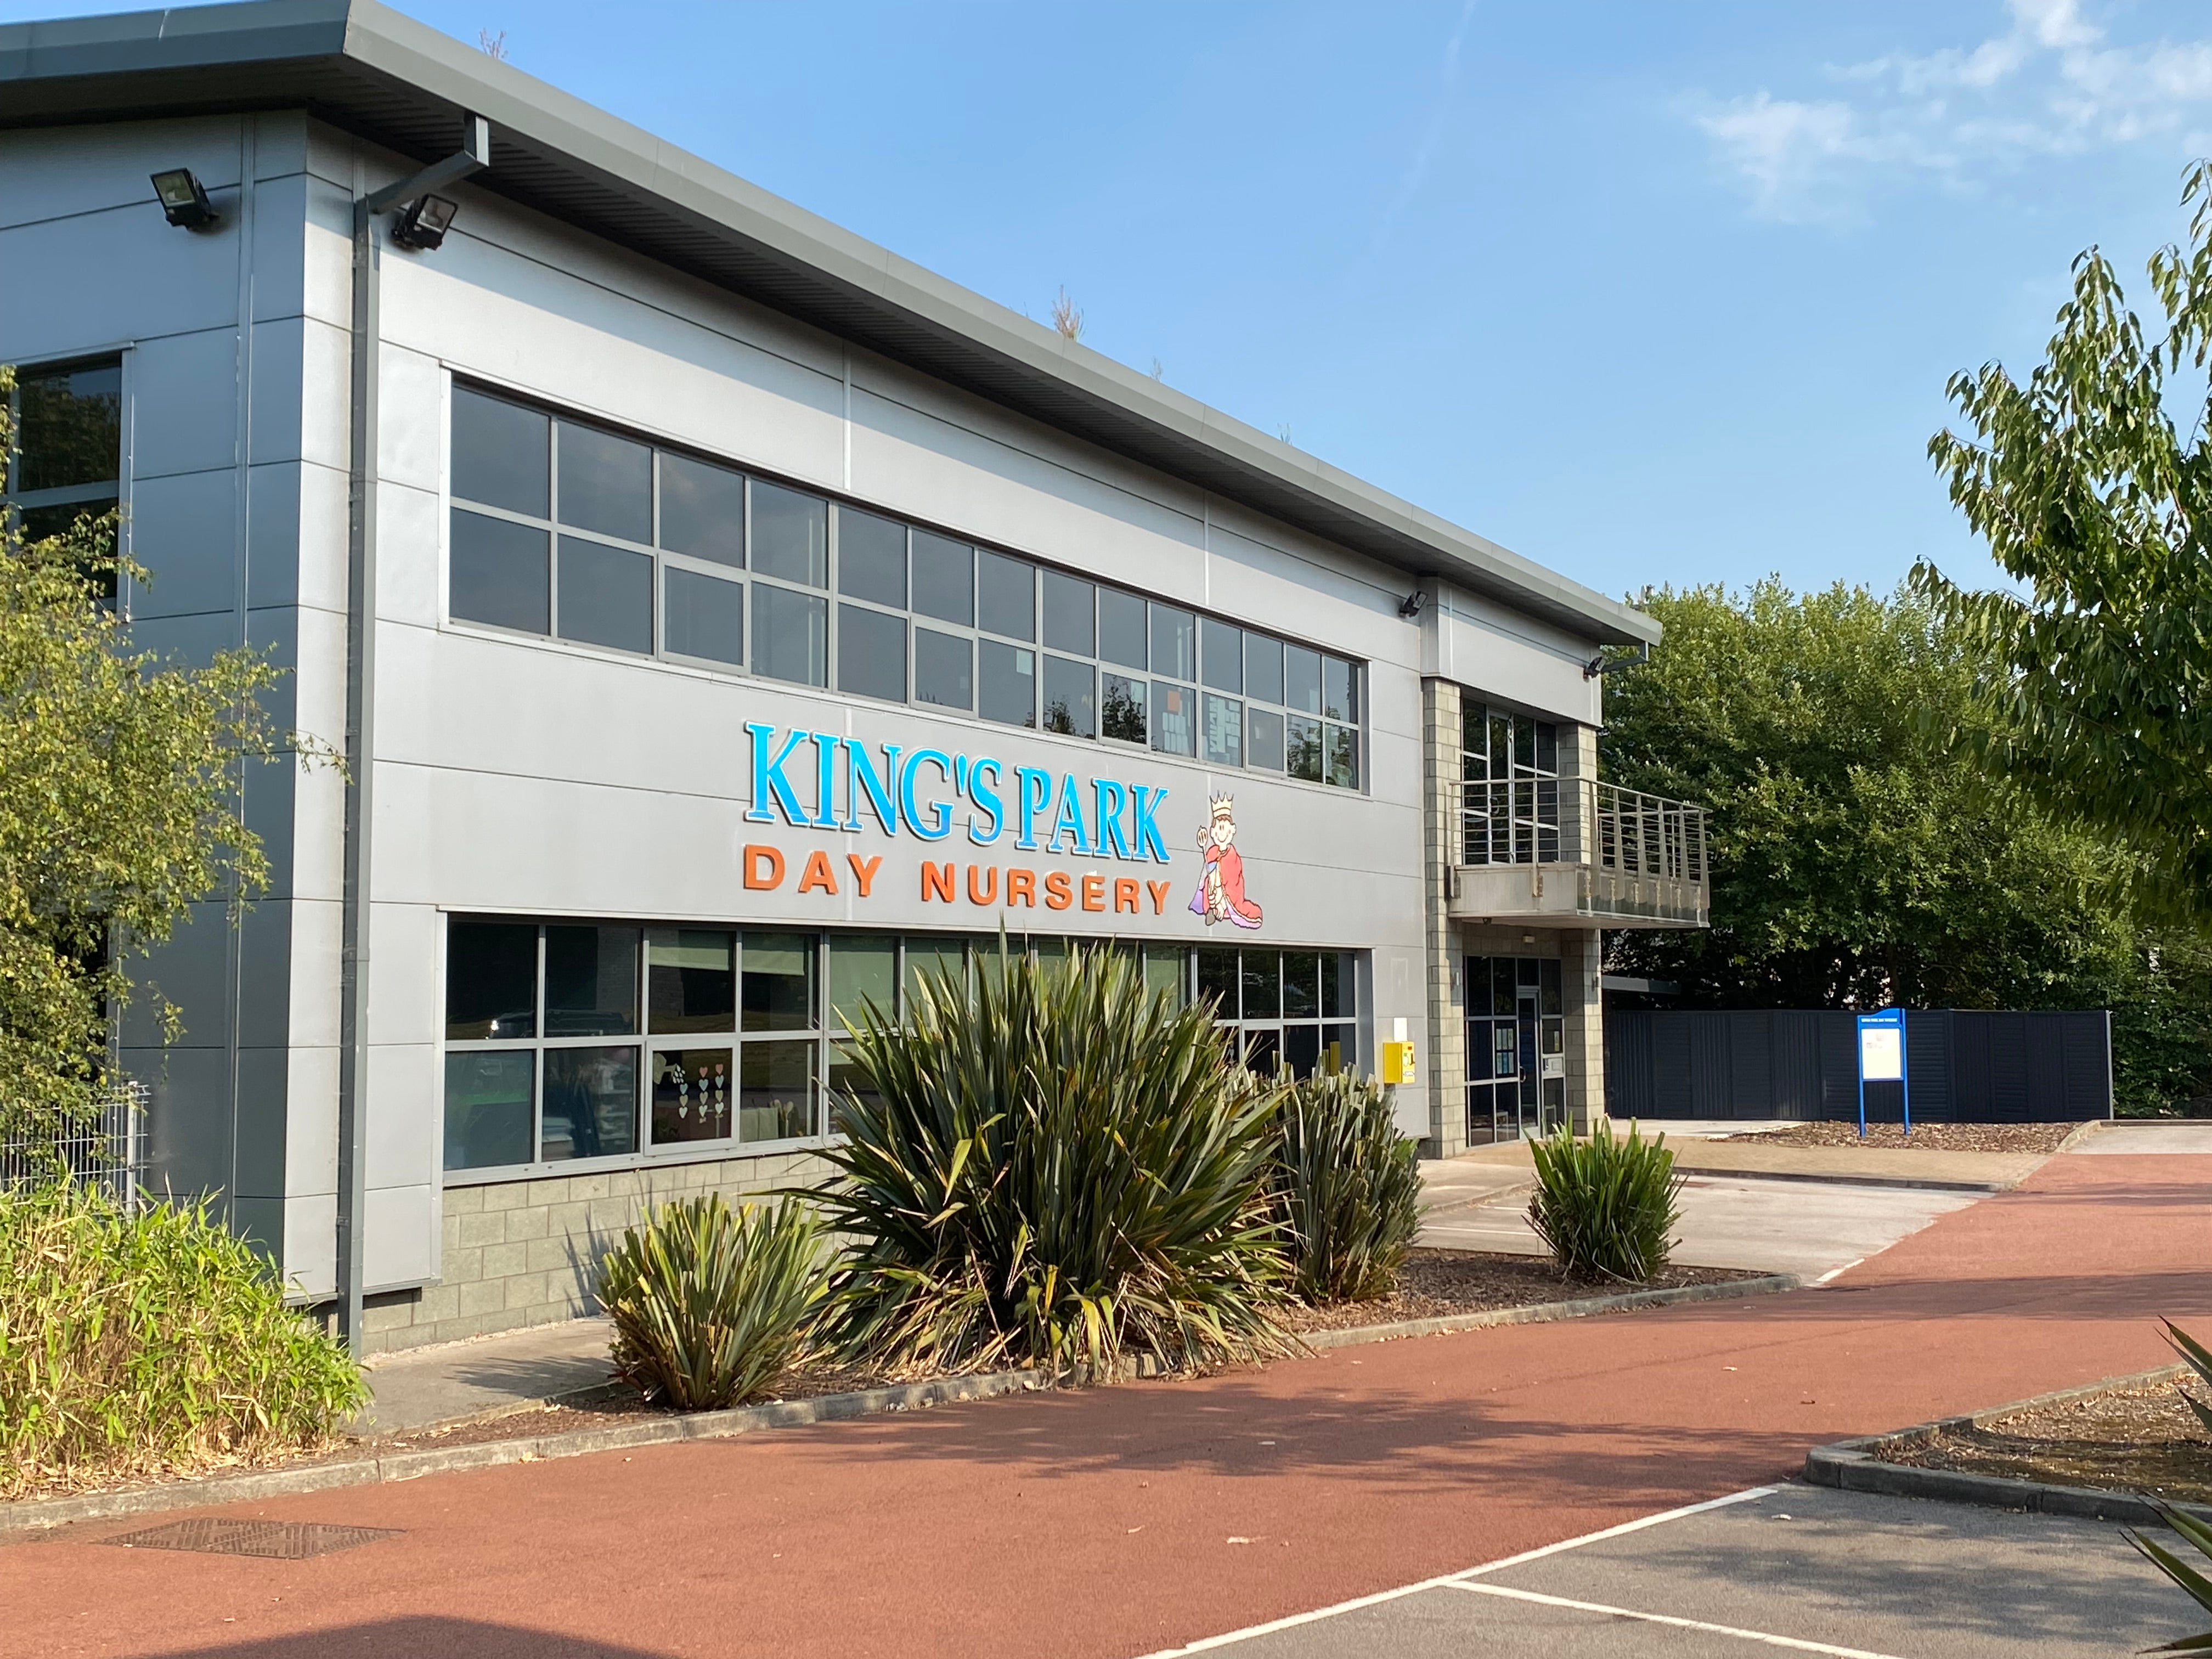 Kings Park Day Nursery in Merseyside